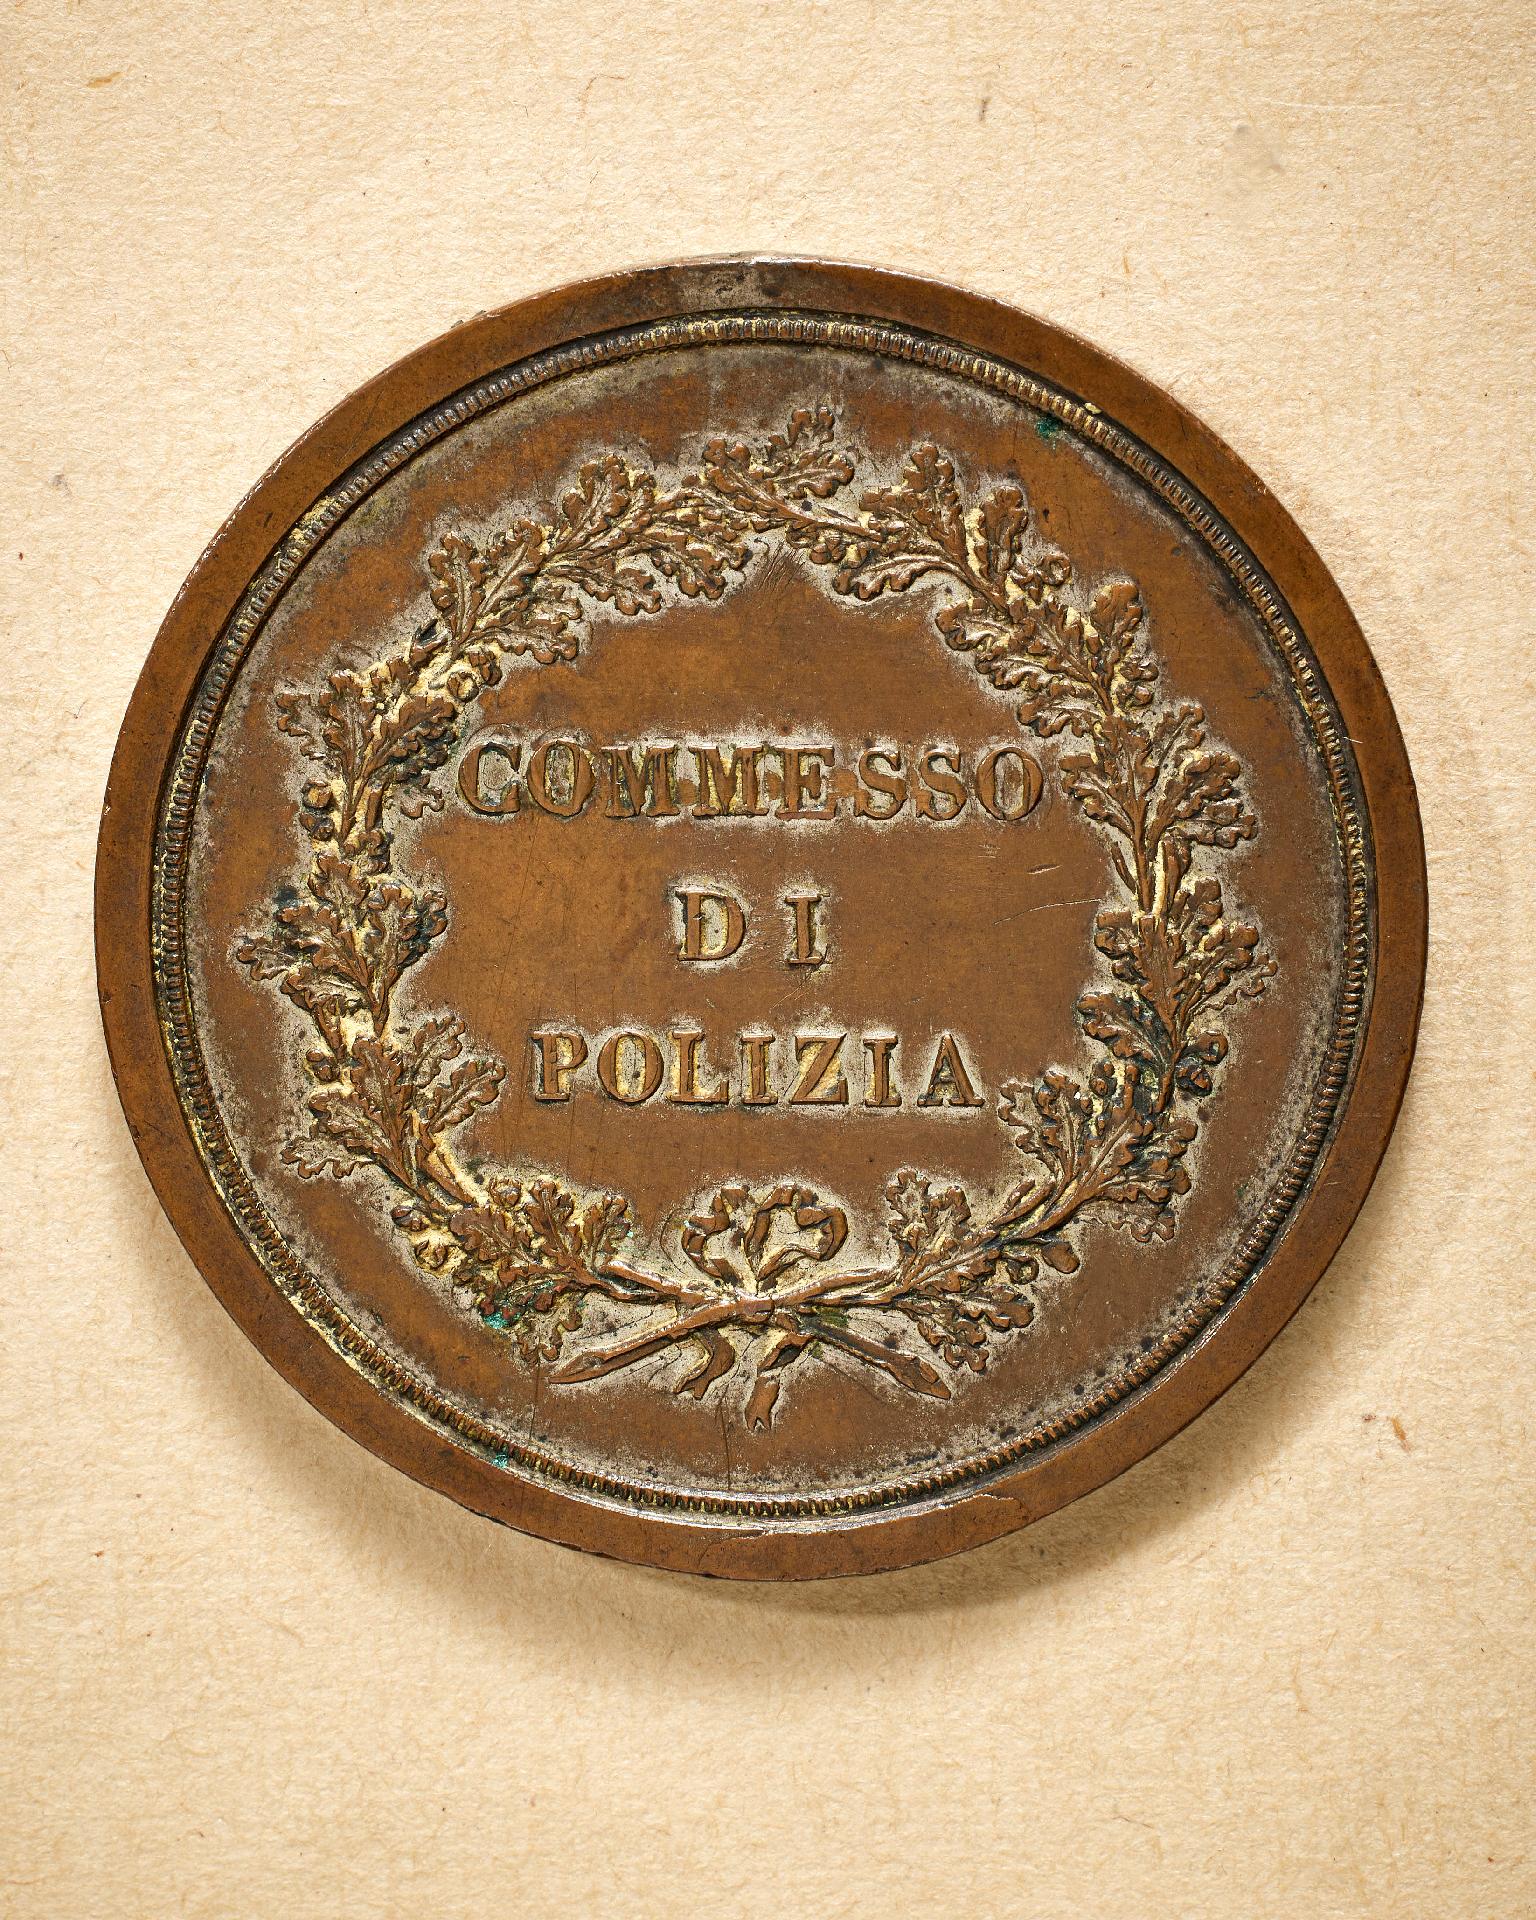 Italien : Königreich Italien (1805): Medaille 2COMMESSO DI POLIZIA" - Image 2 of 2